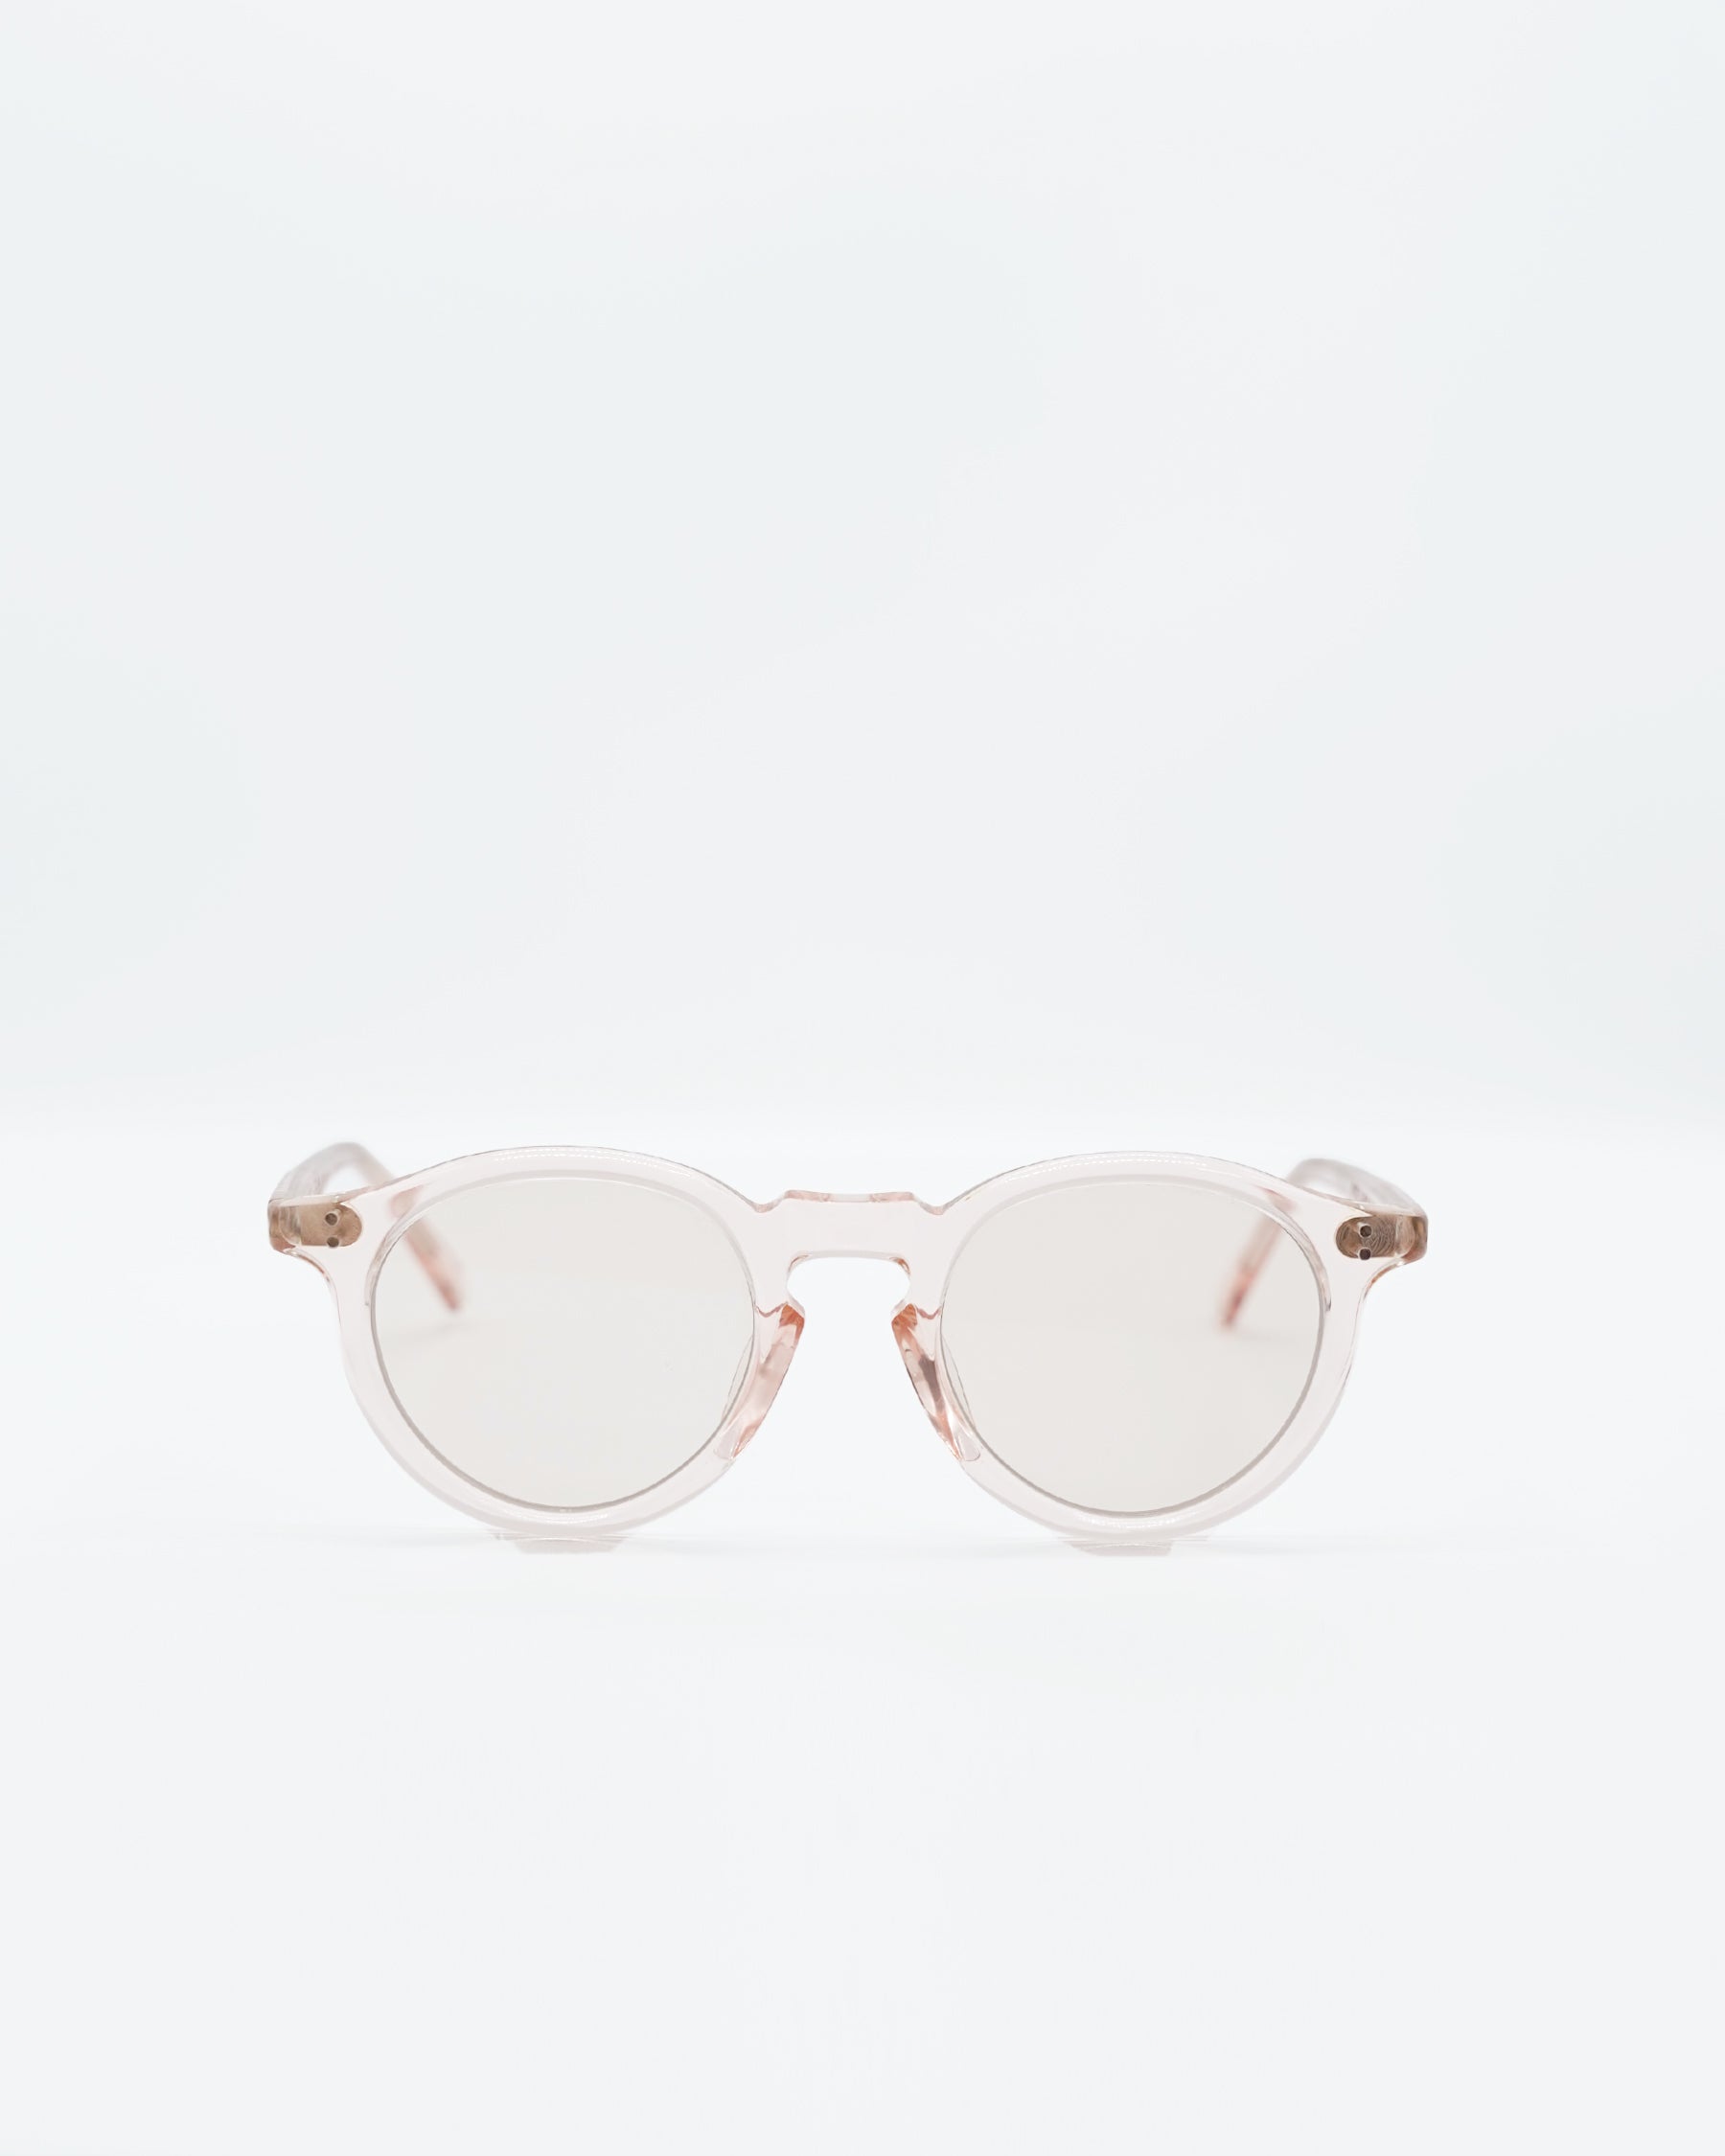 gp-03 Sunglasses rose